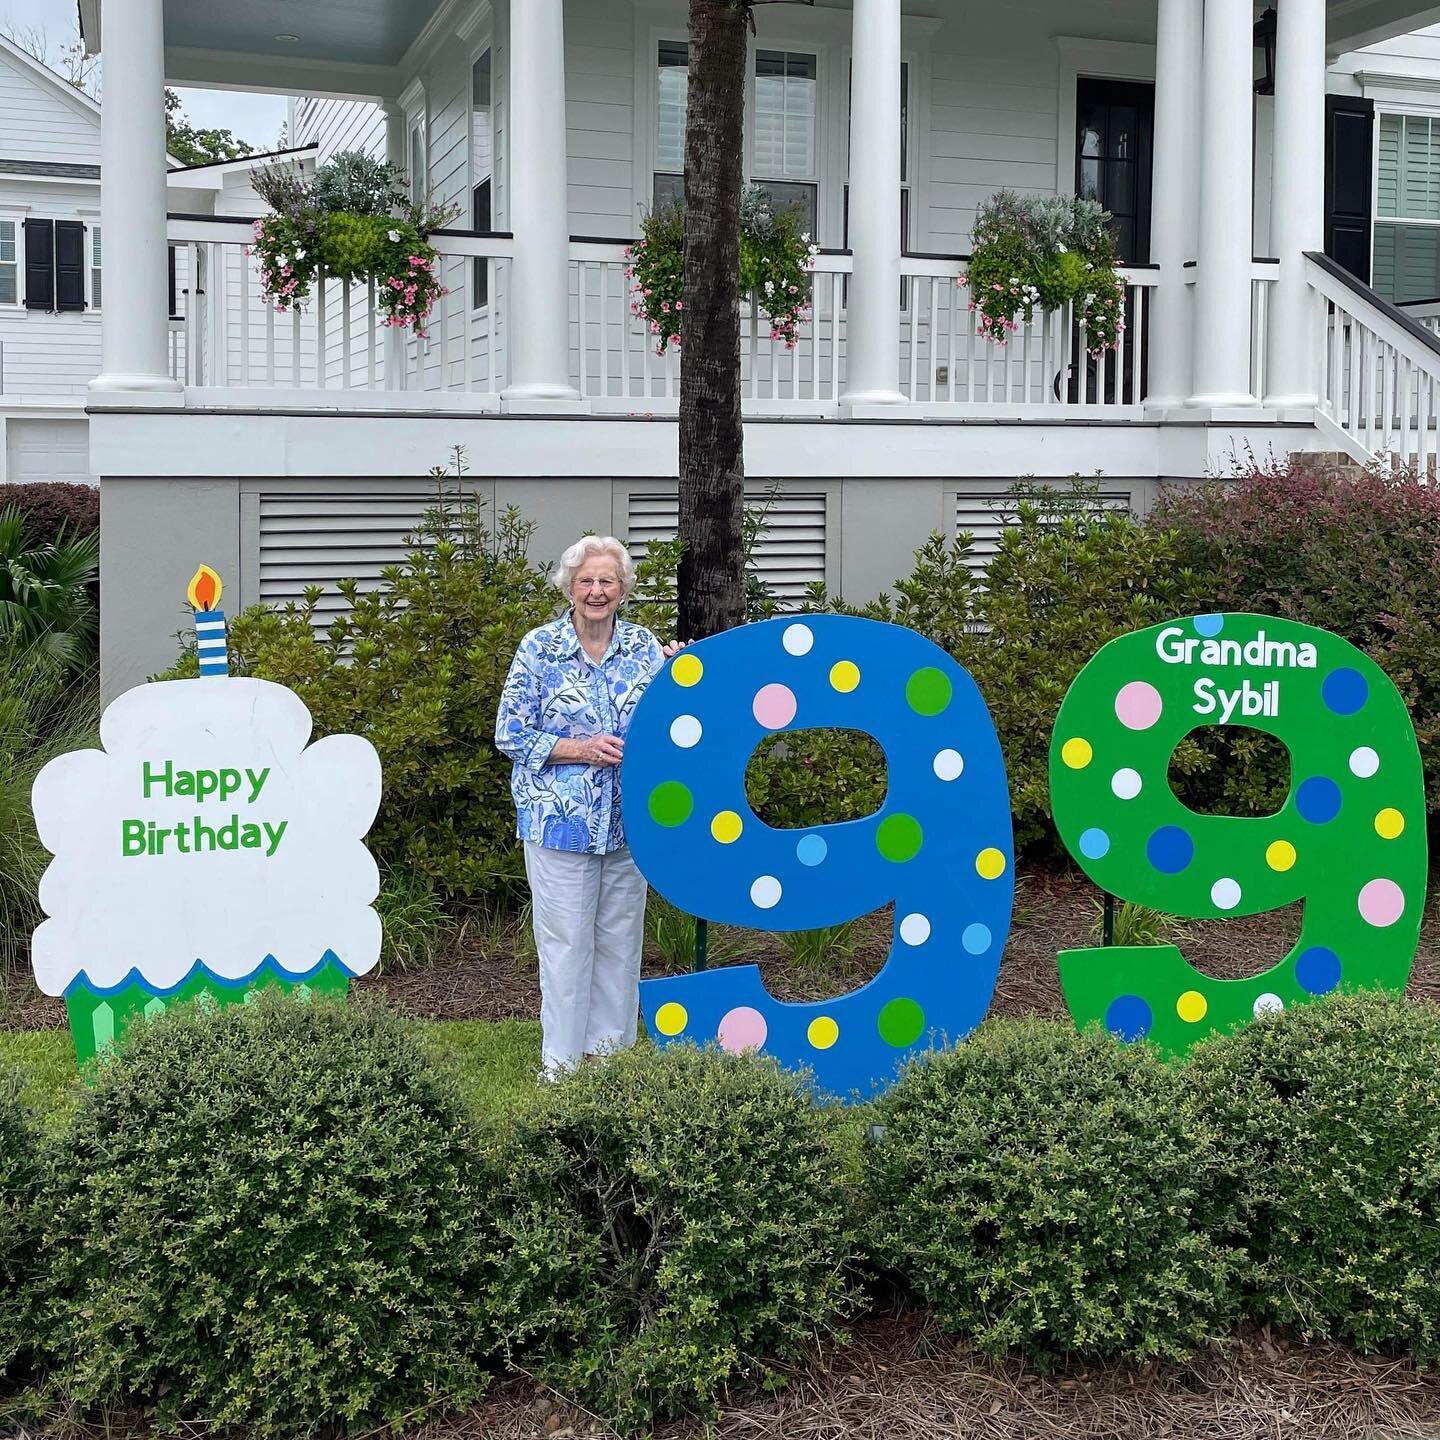 99 looks good on grandma Sybil!

To order click the link in our bio or text 843-345-3501

#sassysignschs #charlestonyardsigns #99thbirthday #grandmasbirthday #birthdayyardsigns